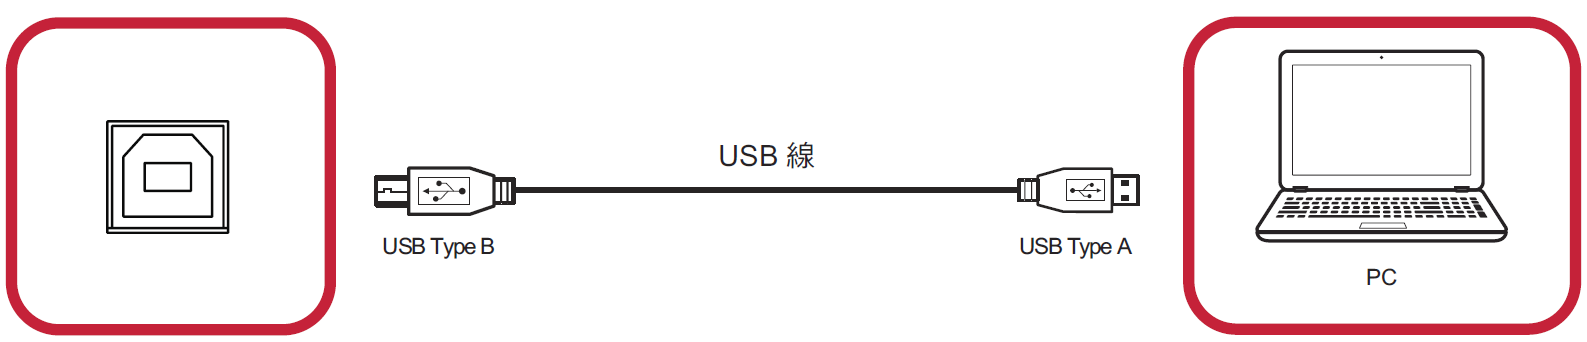 LD Connect USBB TCH.png